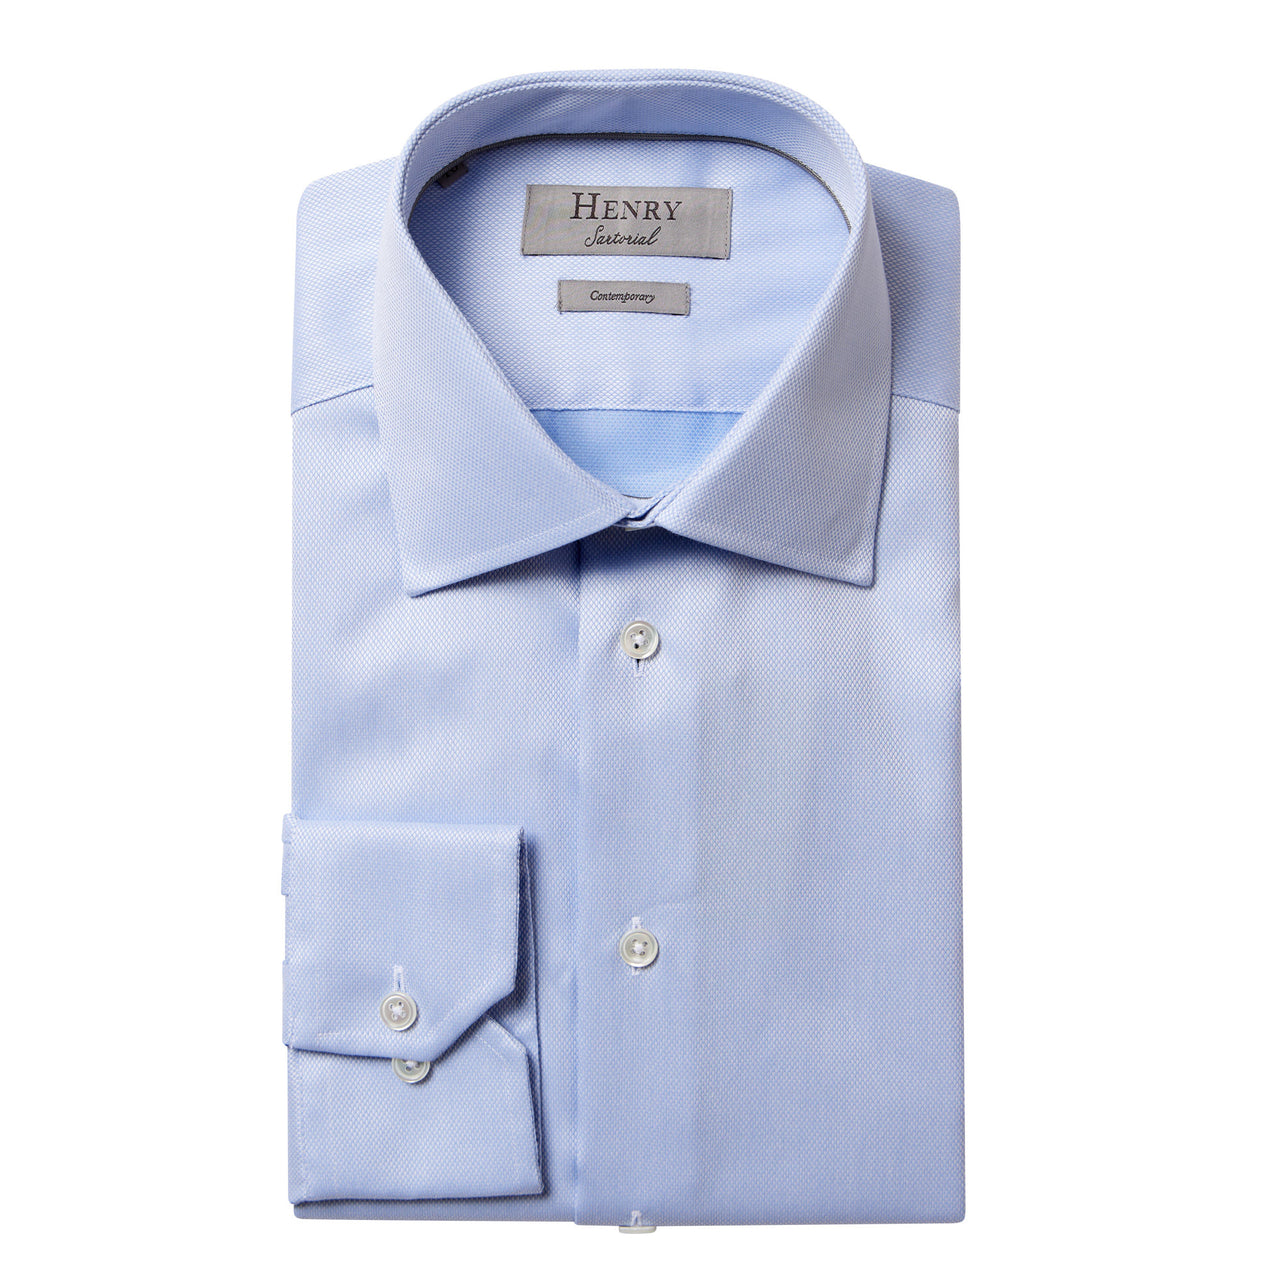 HENRY SARTORIAL Plain Oxford Business Shirt Single Cuff Contemporary Fit POWDER BLUE